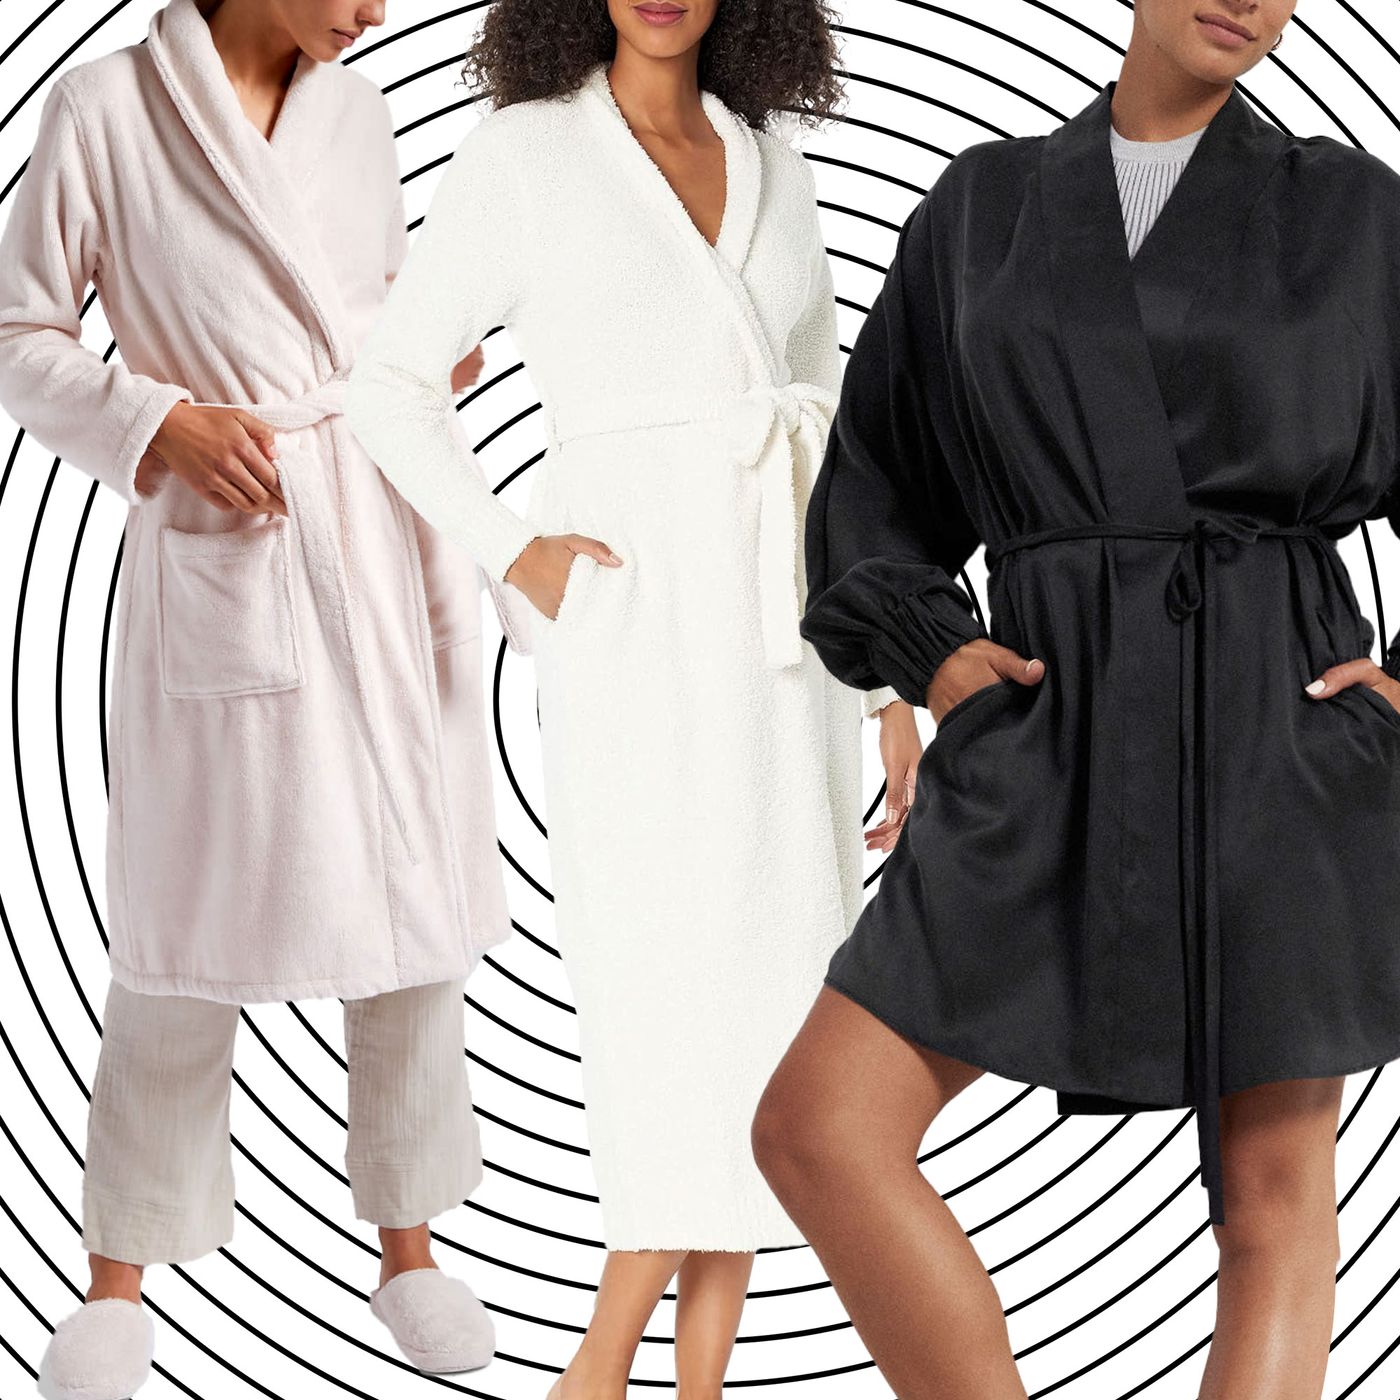 Plus Size Loungewear & Robes for Women - Macy's